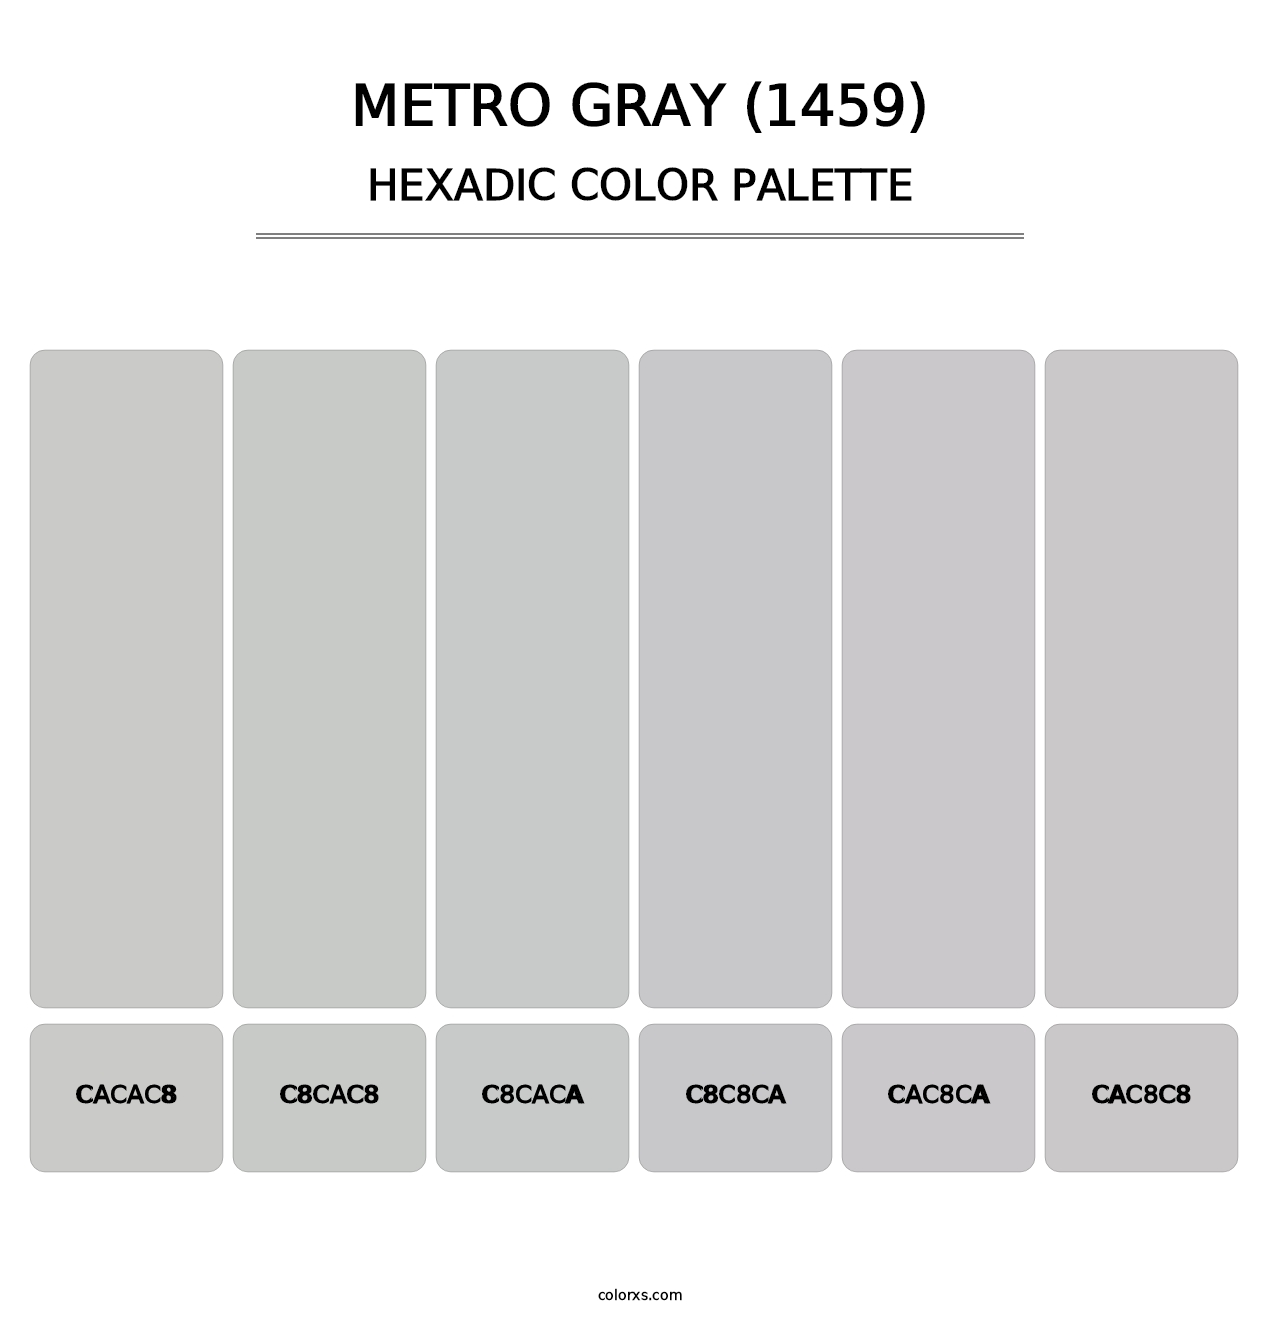 Metro Gray (1459) - Hexadic Color Palette